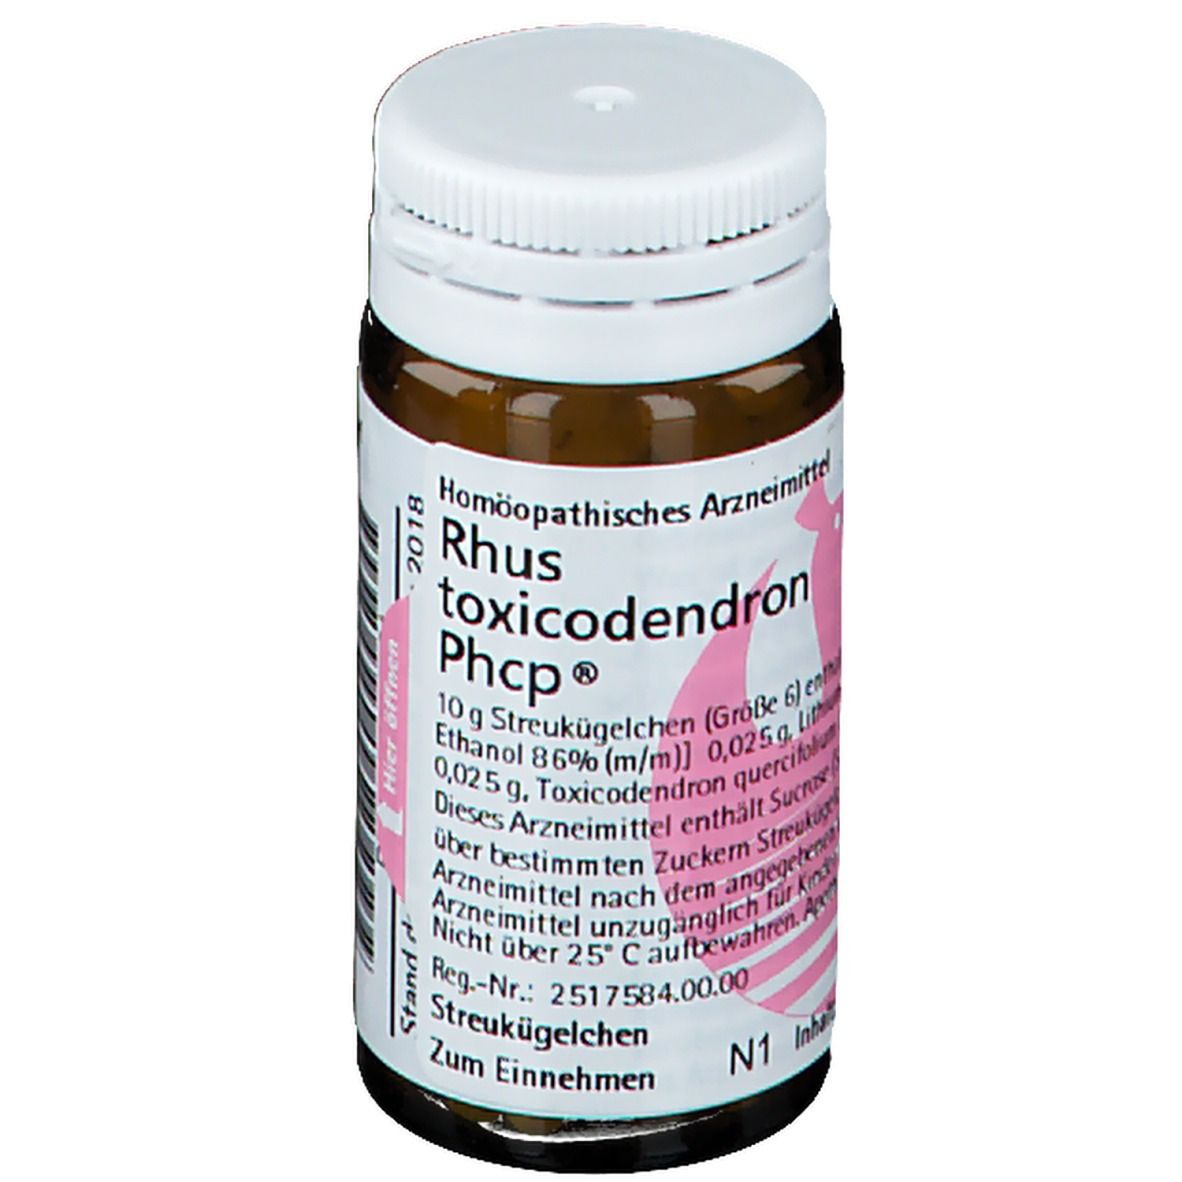 Rhus toxicodendron Phcp®